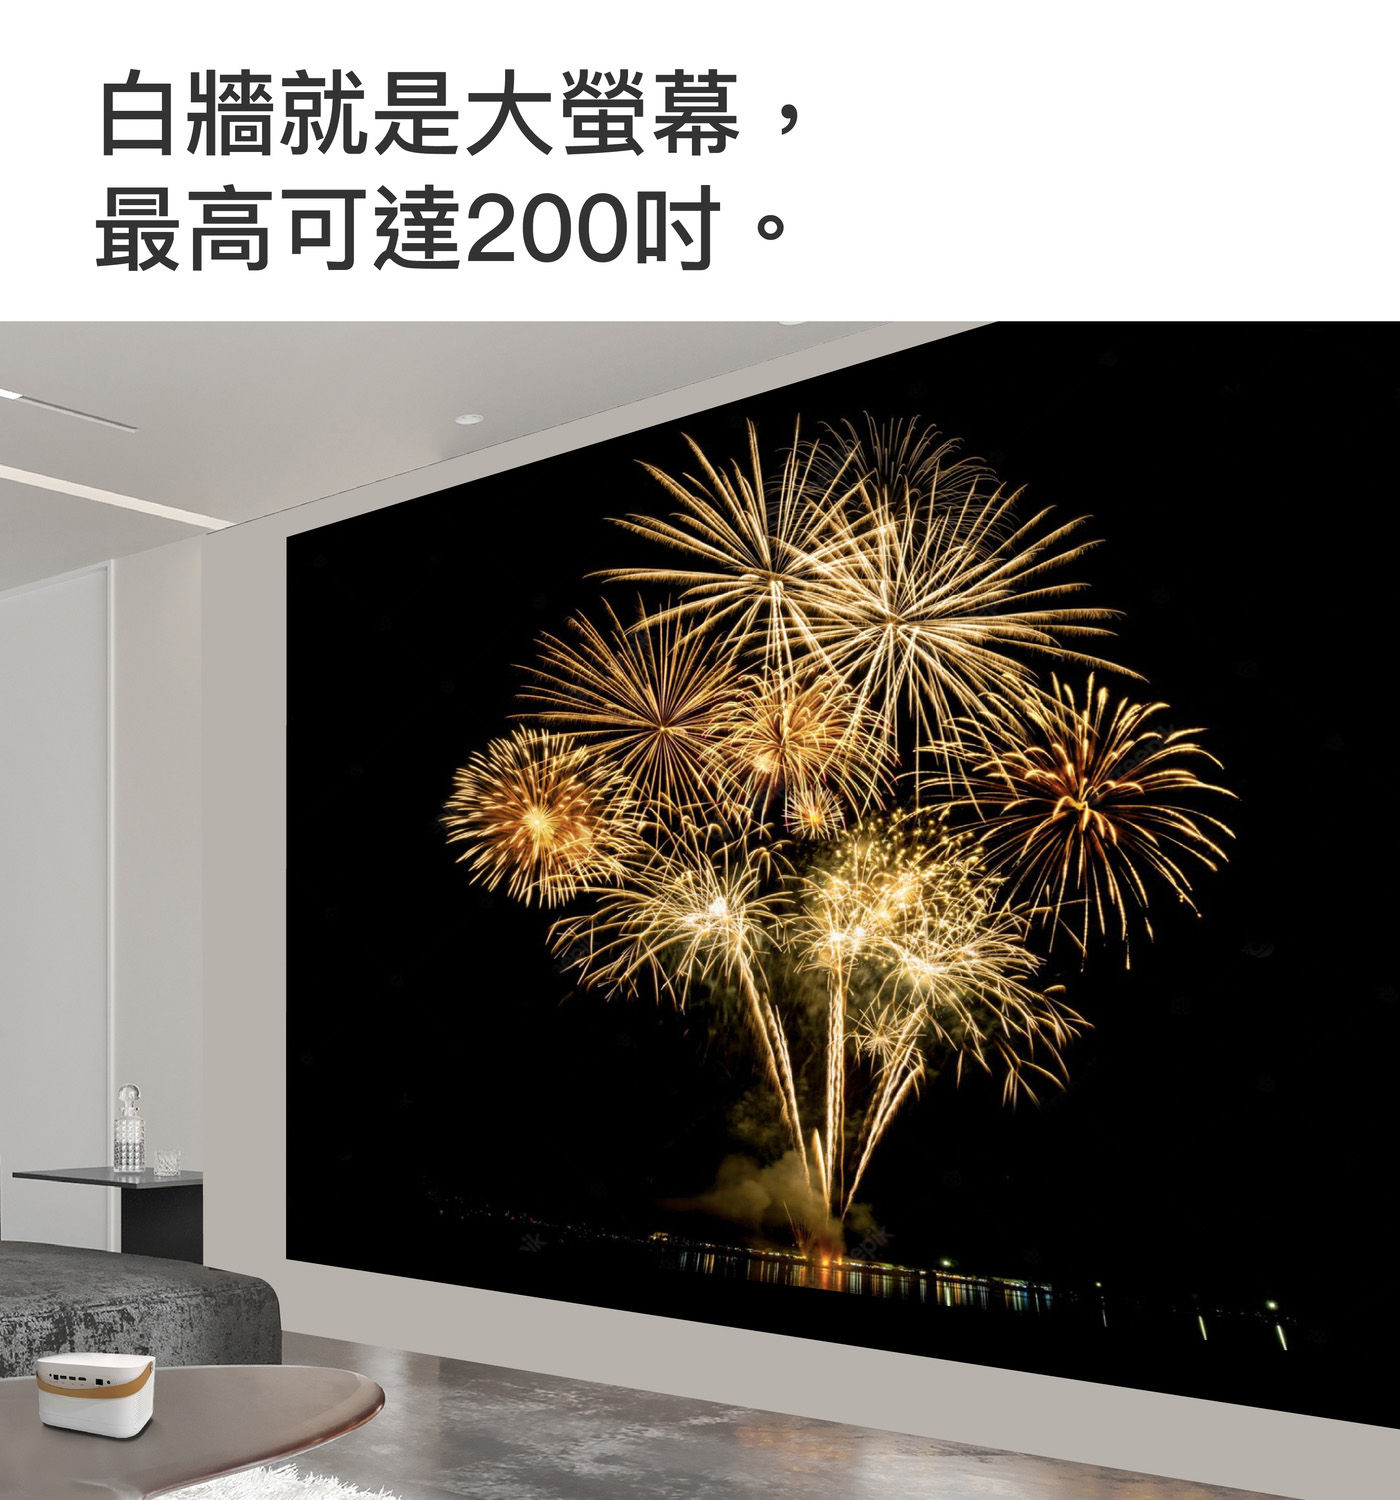 OVO 百吋無框電視 3D增強版 K3-E白牆就是大螢幕最高可達200吋的投影巨幕